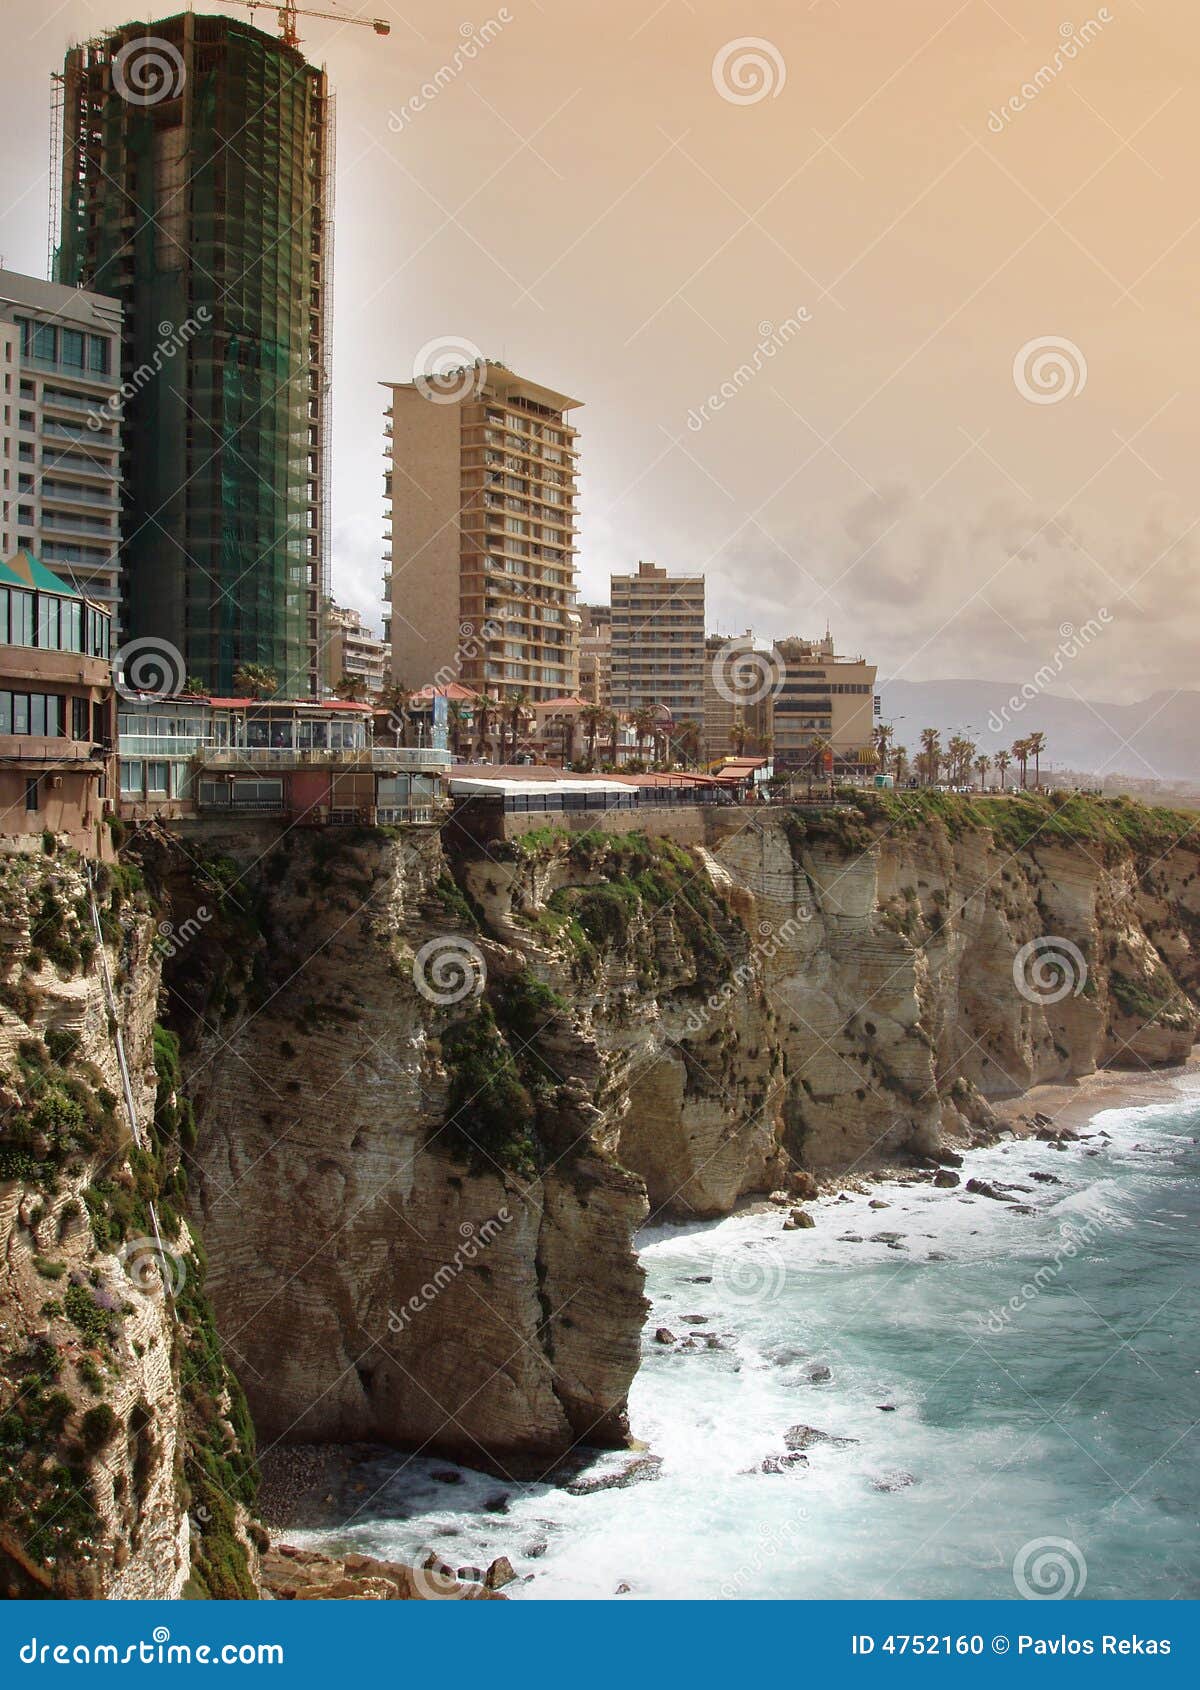 beirut shoreline - lebanon